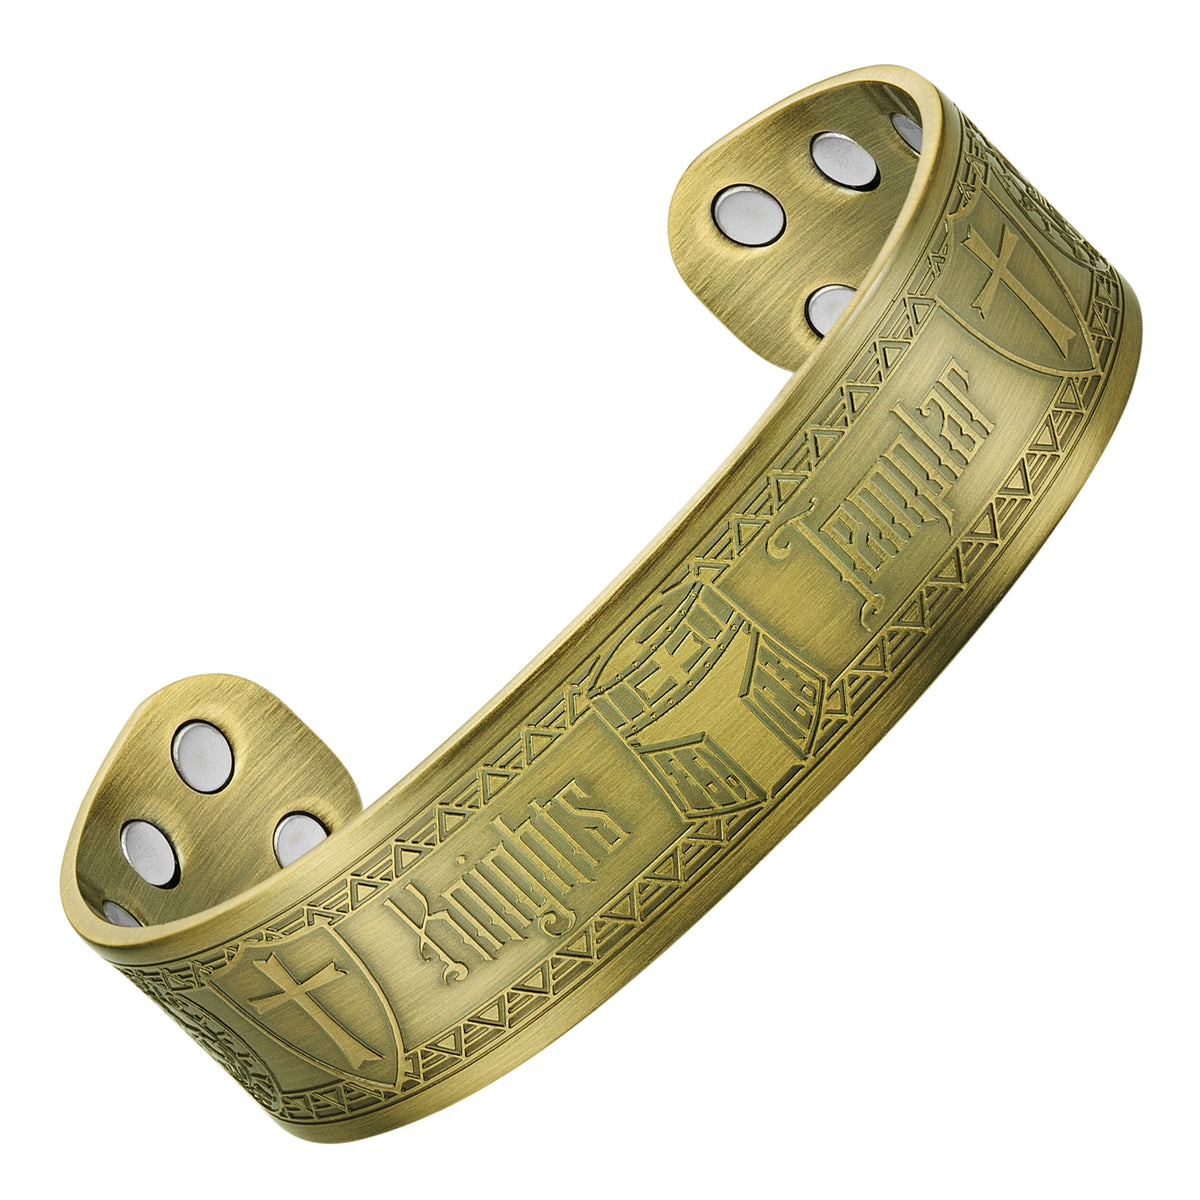 TemplarMan Engraved Pure Copper Bangle Bracelet - Antique Gold Finish